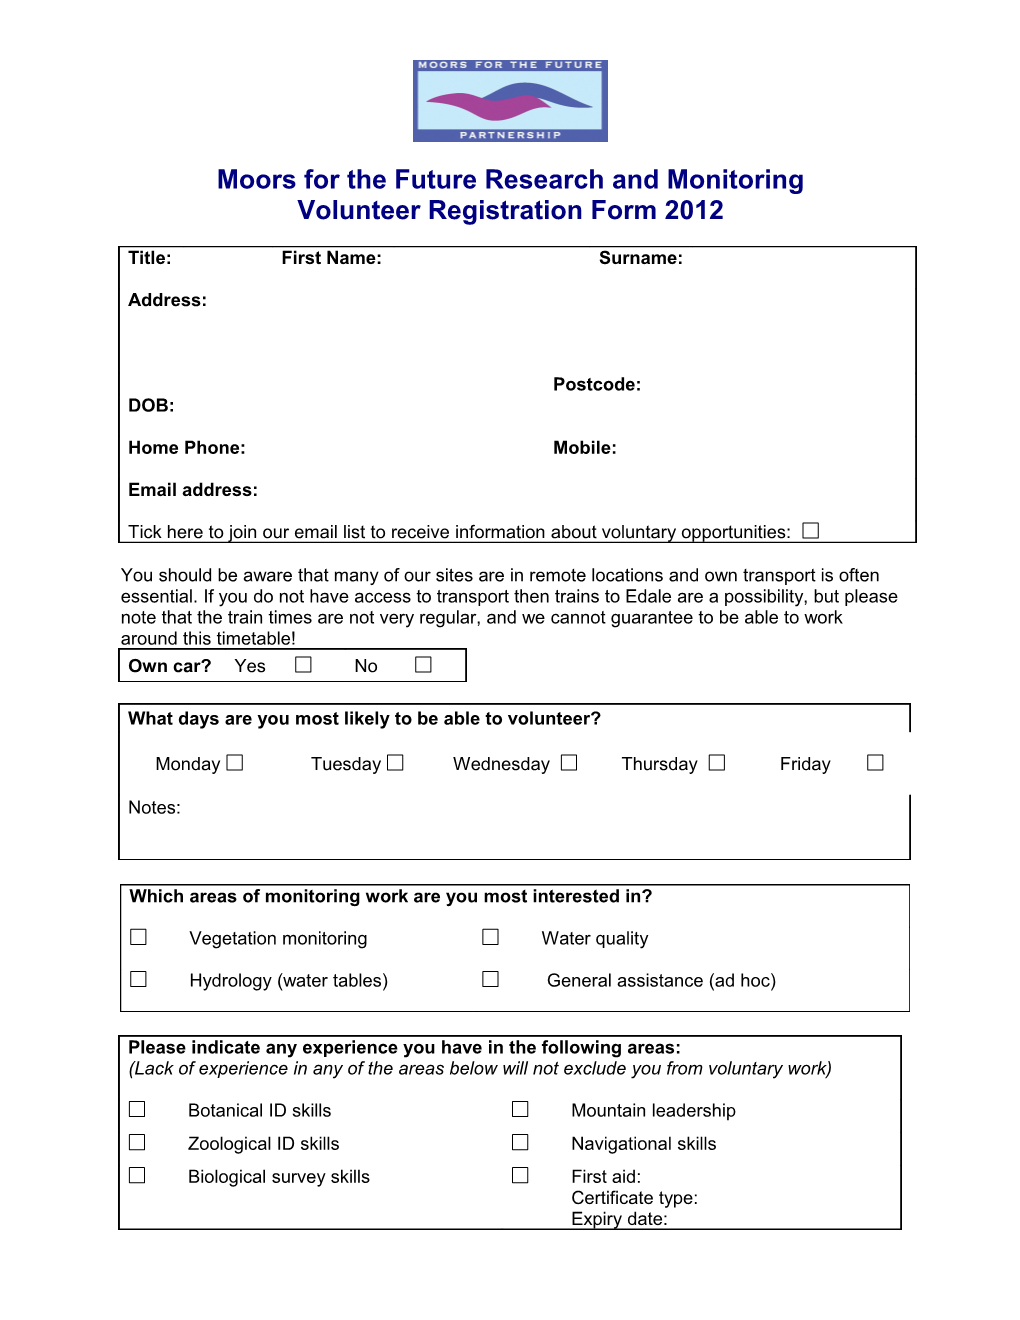 Moors for the Future Volunteer Registration Form